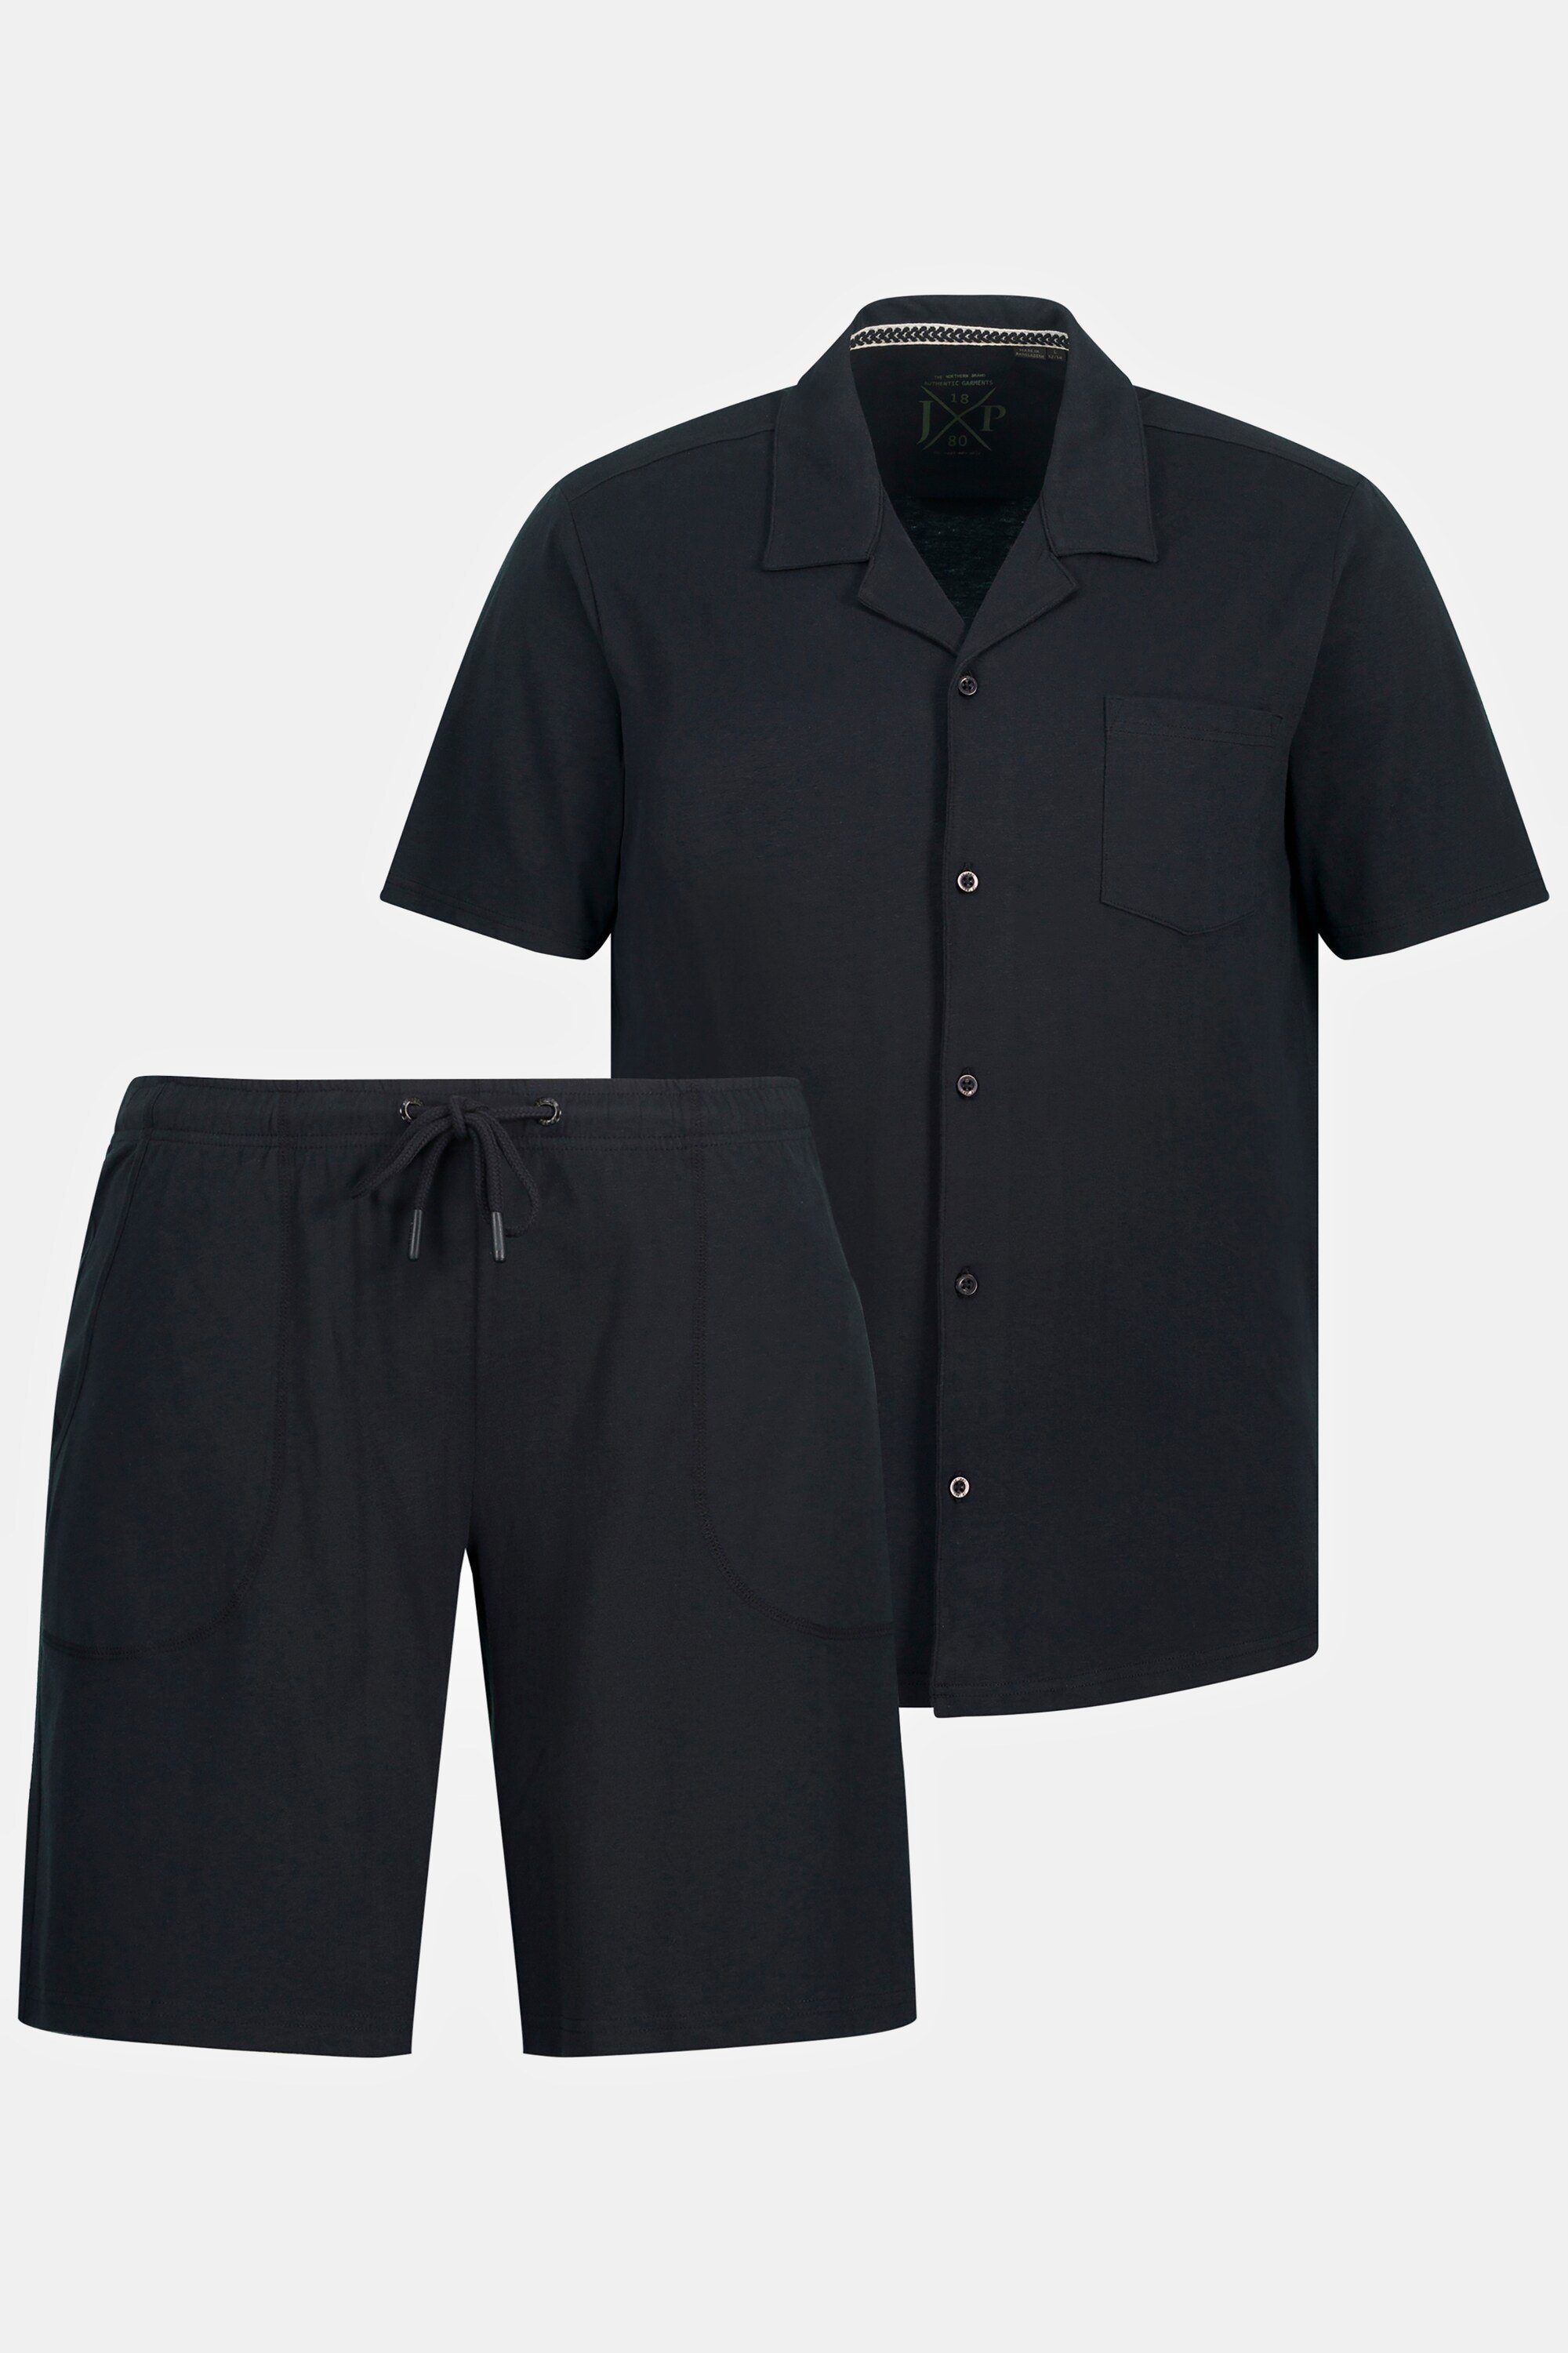 JP1880 Kragen Schlafanzug Cuba Shorts Homewear Oberteil Schlafanzug